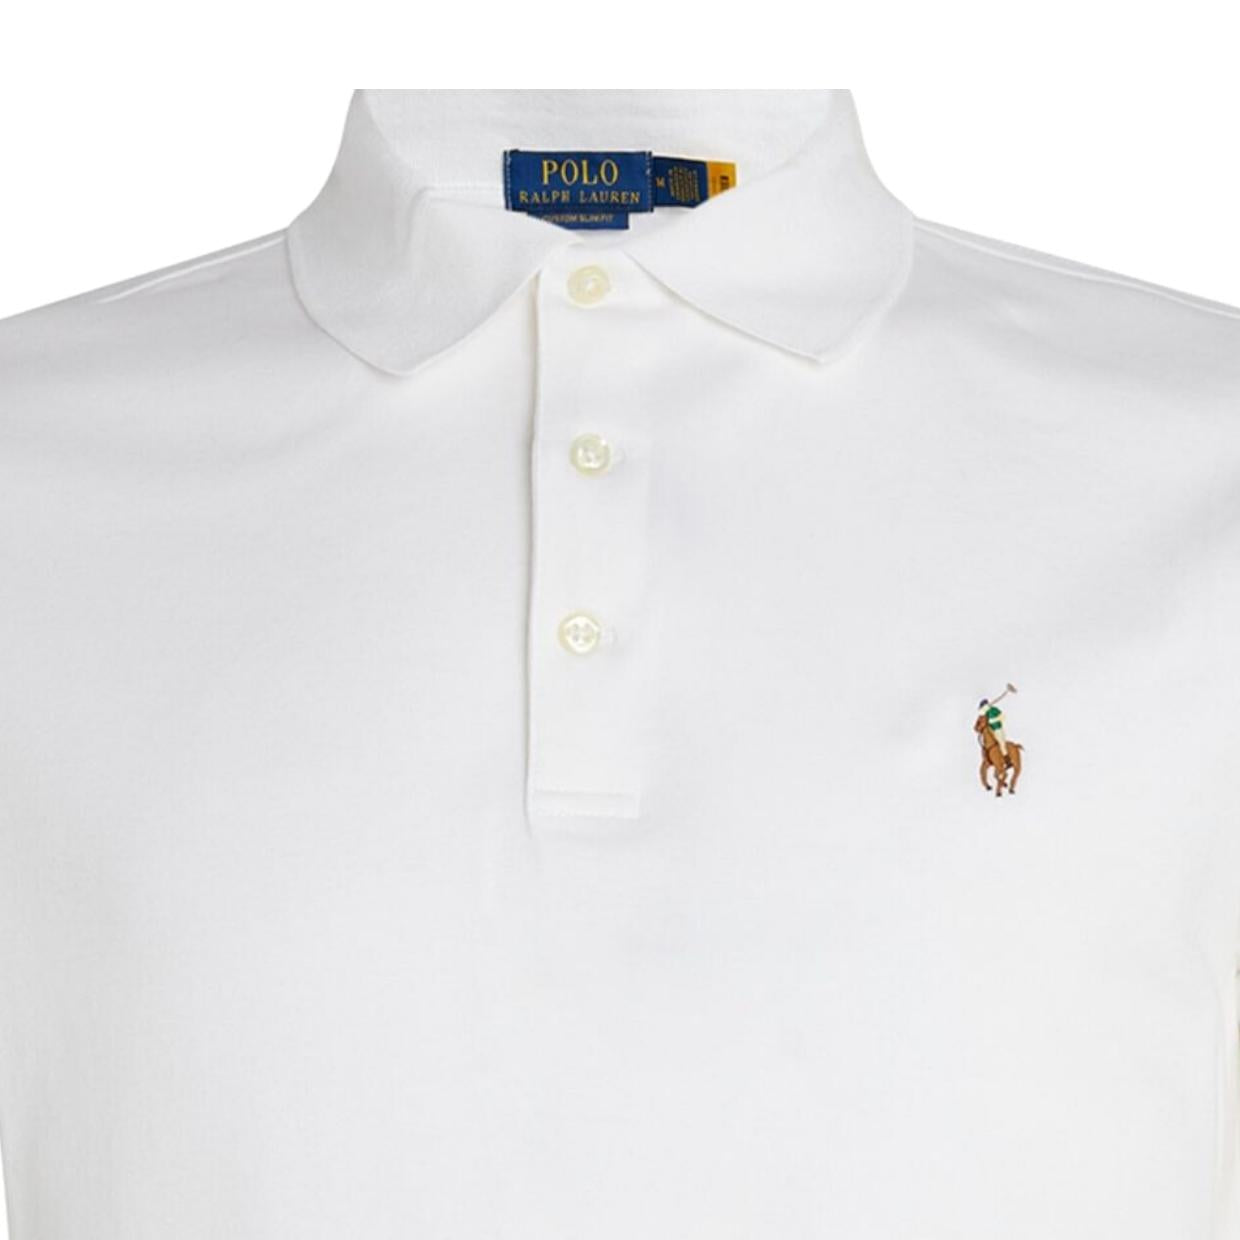 Polo Ralph Lauren Short Sleeve White Polo Shirt